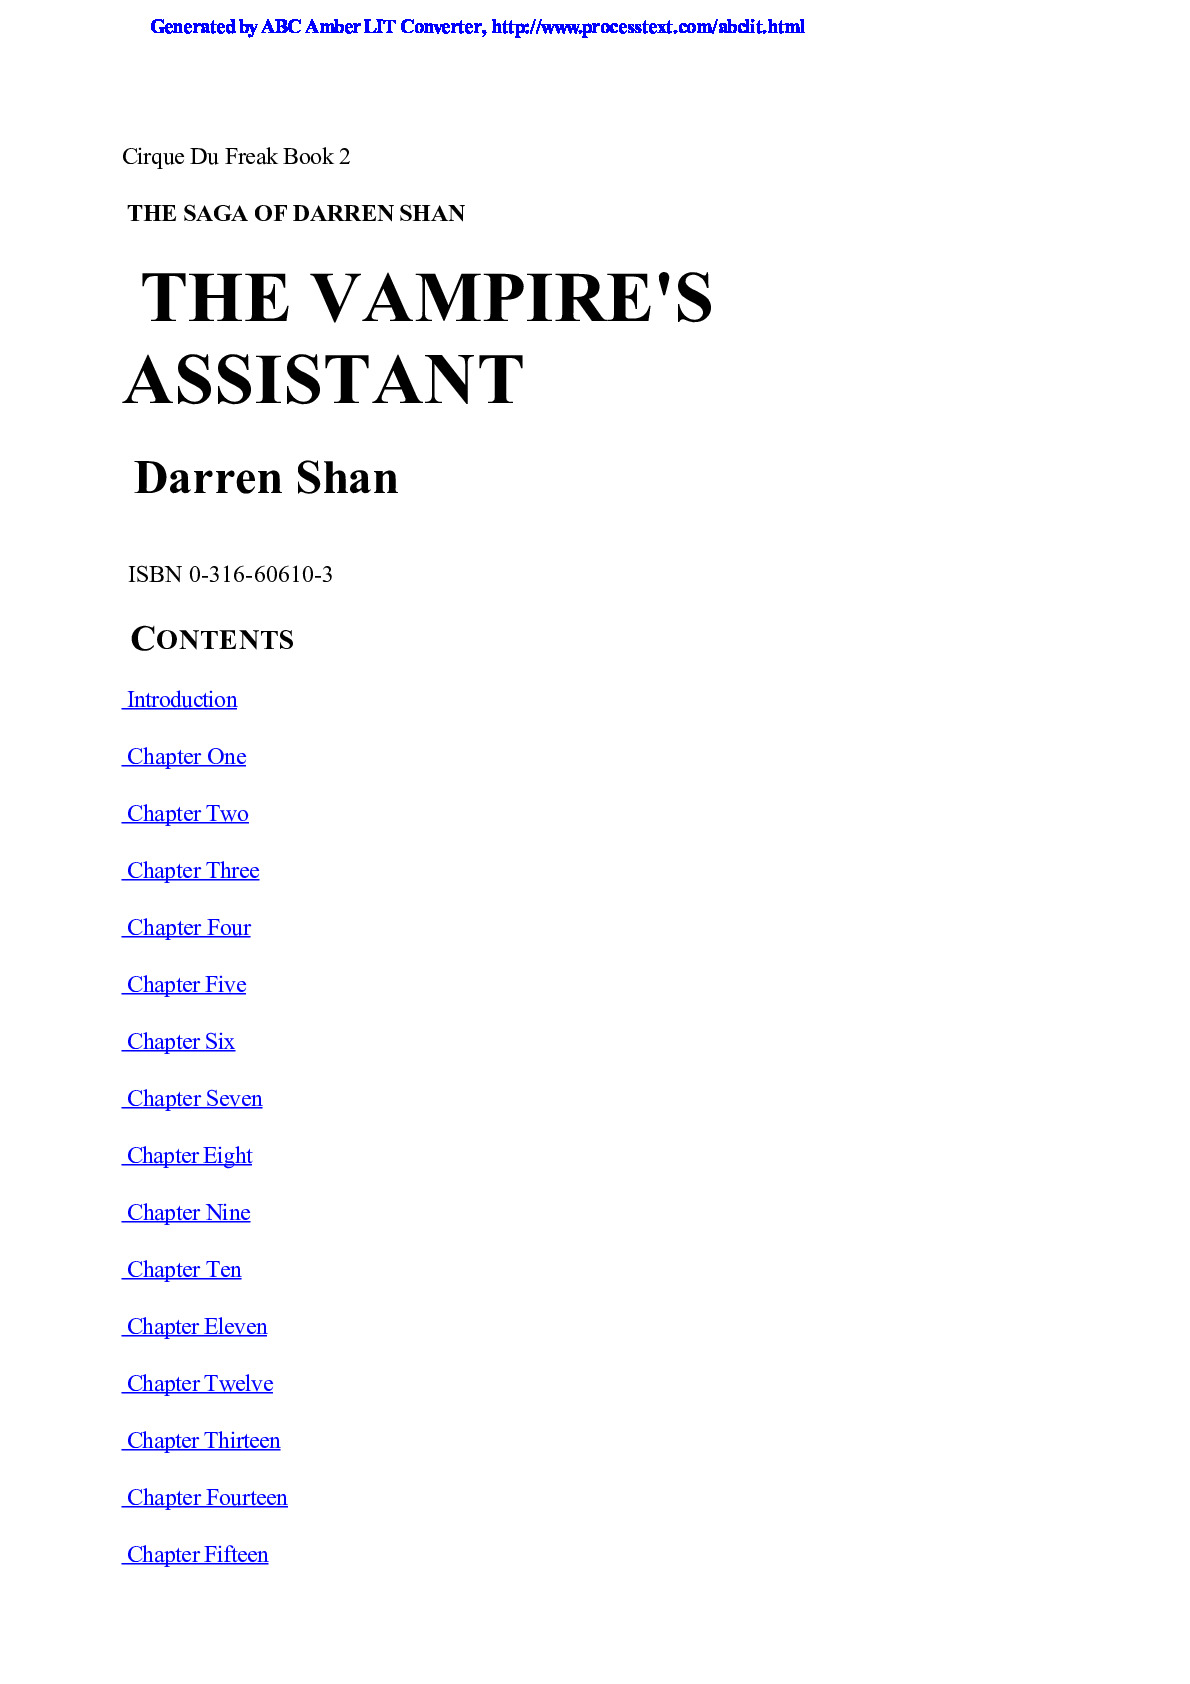 Shan, Darren – Cirque Du Freak 02 – The Vampire’s Assistant